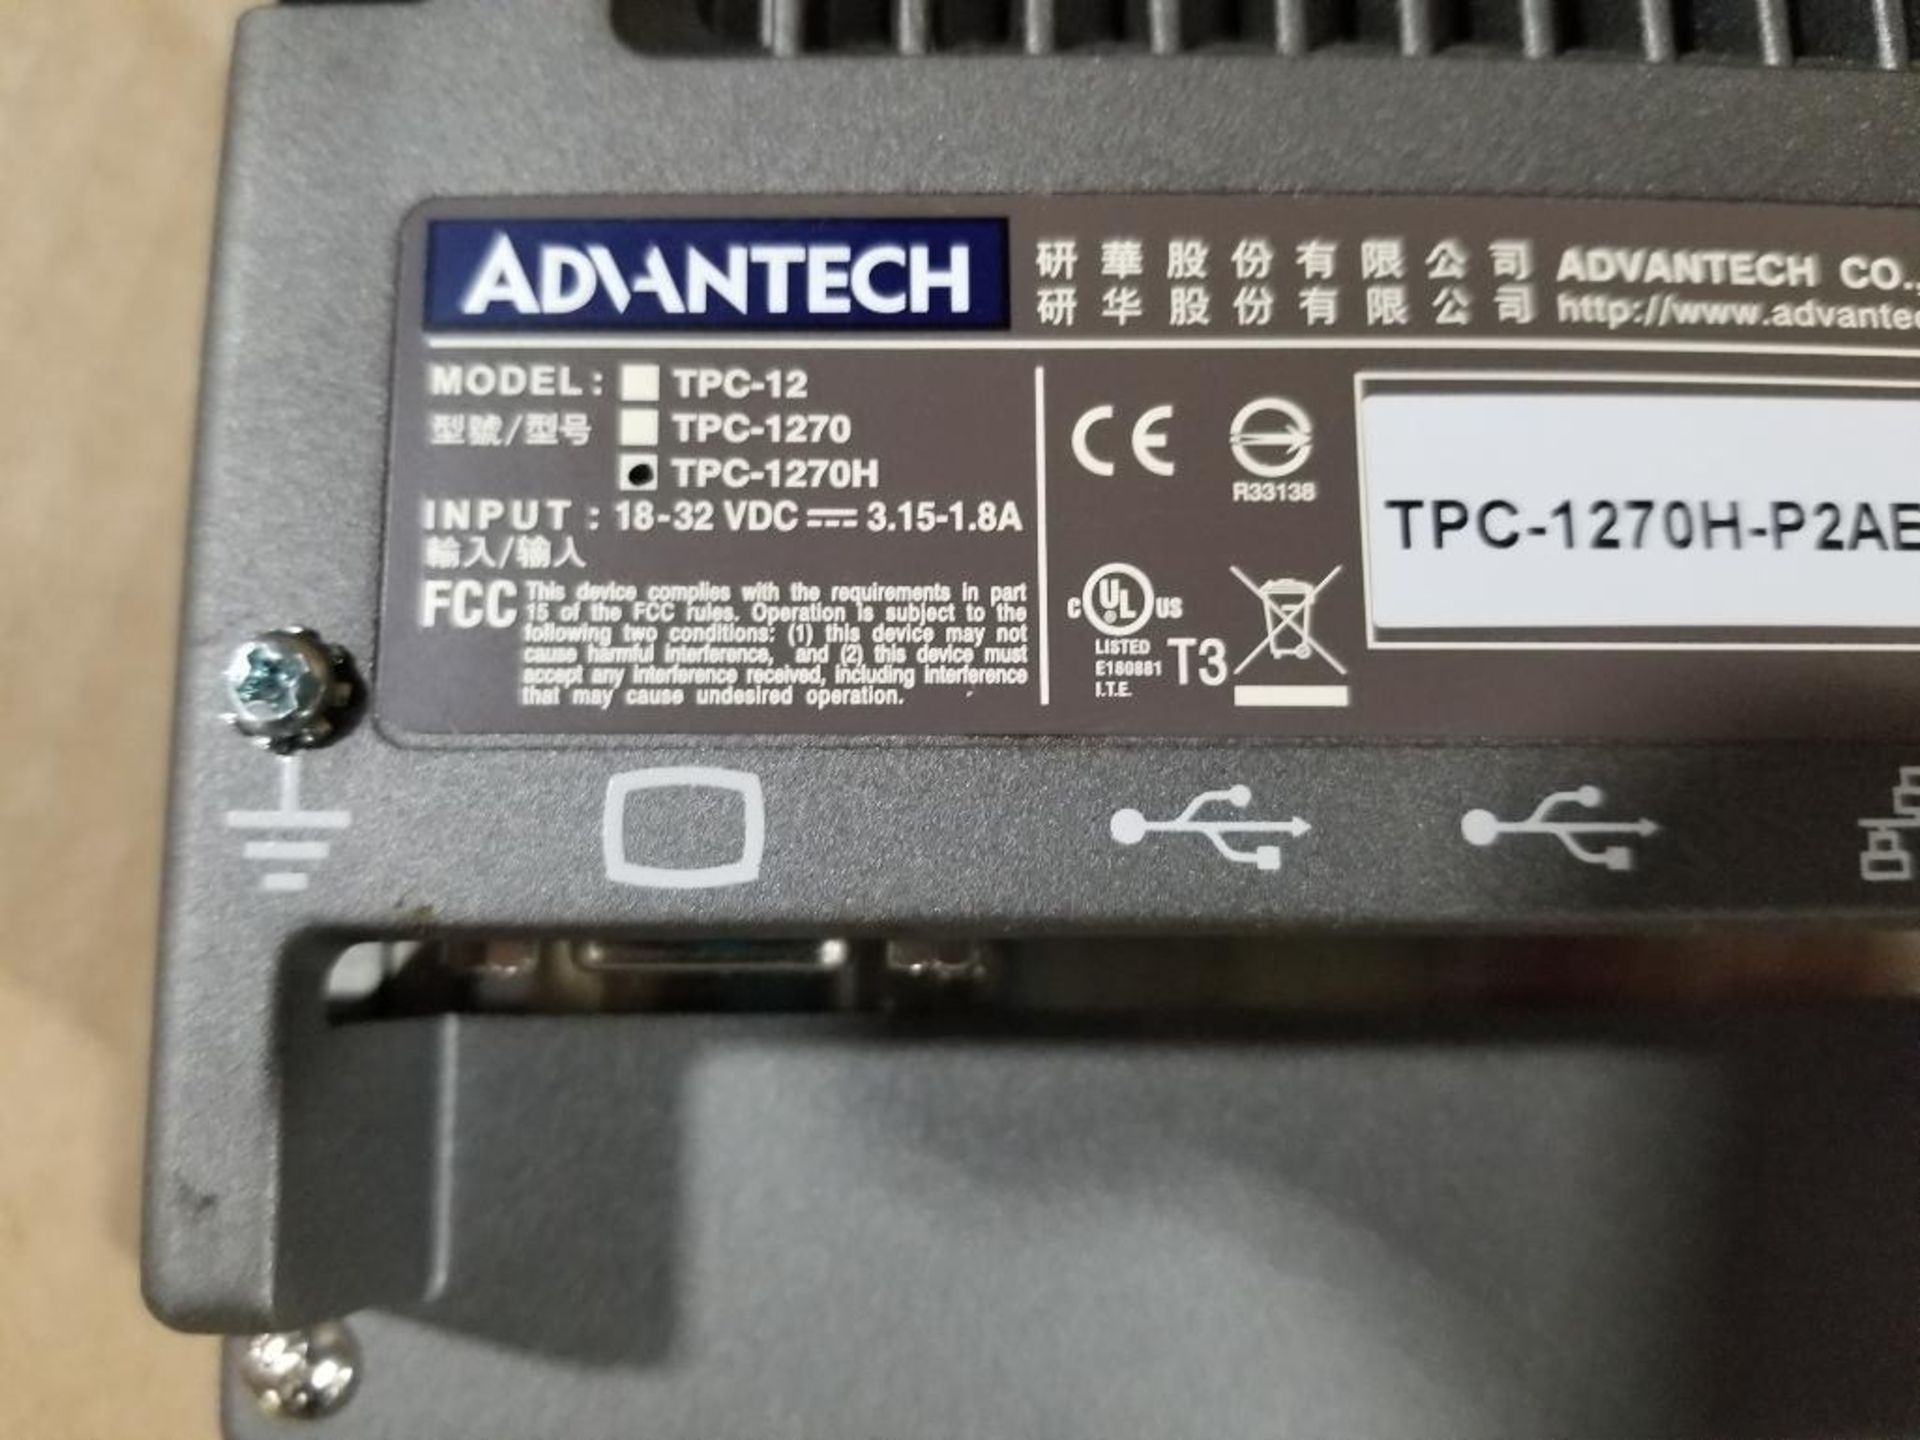 Advantech user interface machine panel. ModelTPC-1270H. - Image 3 of 4